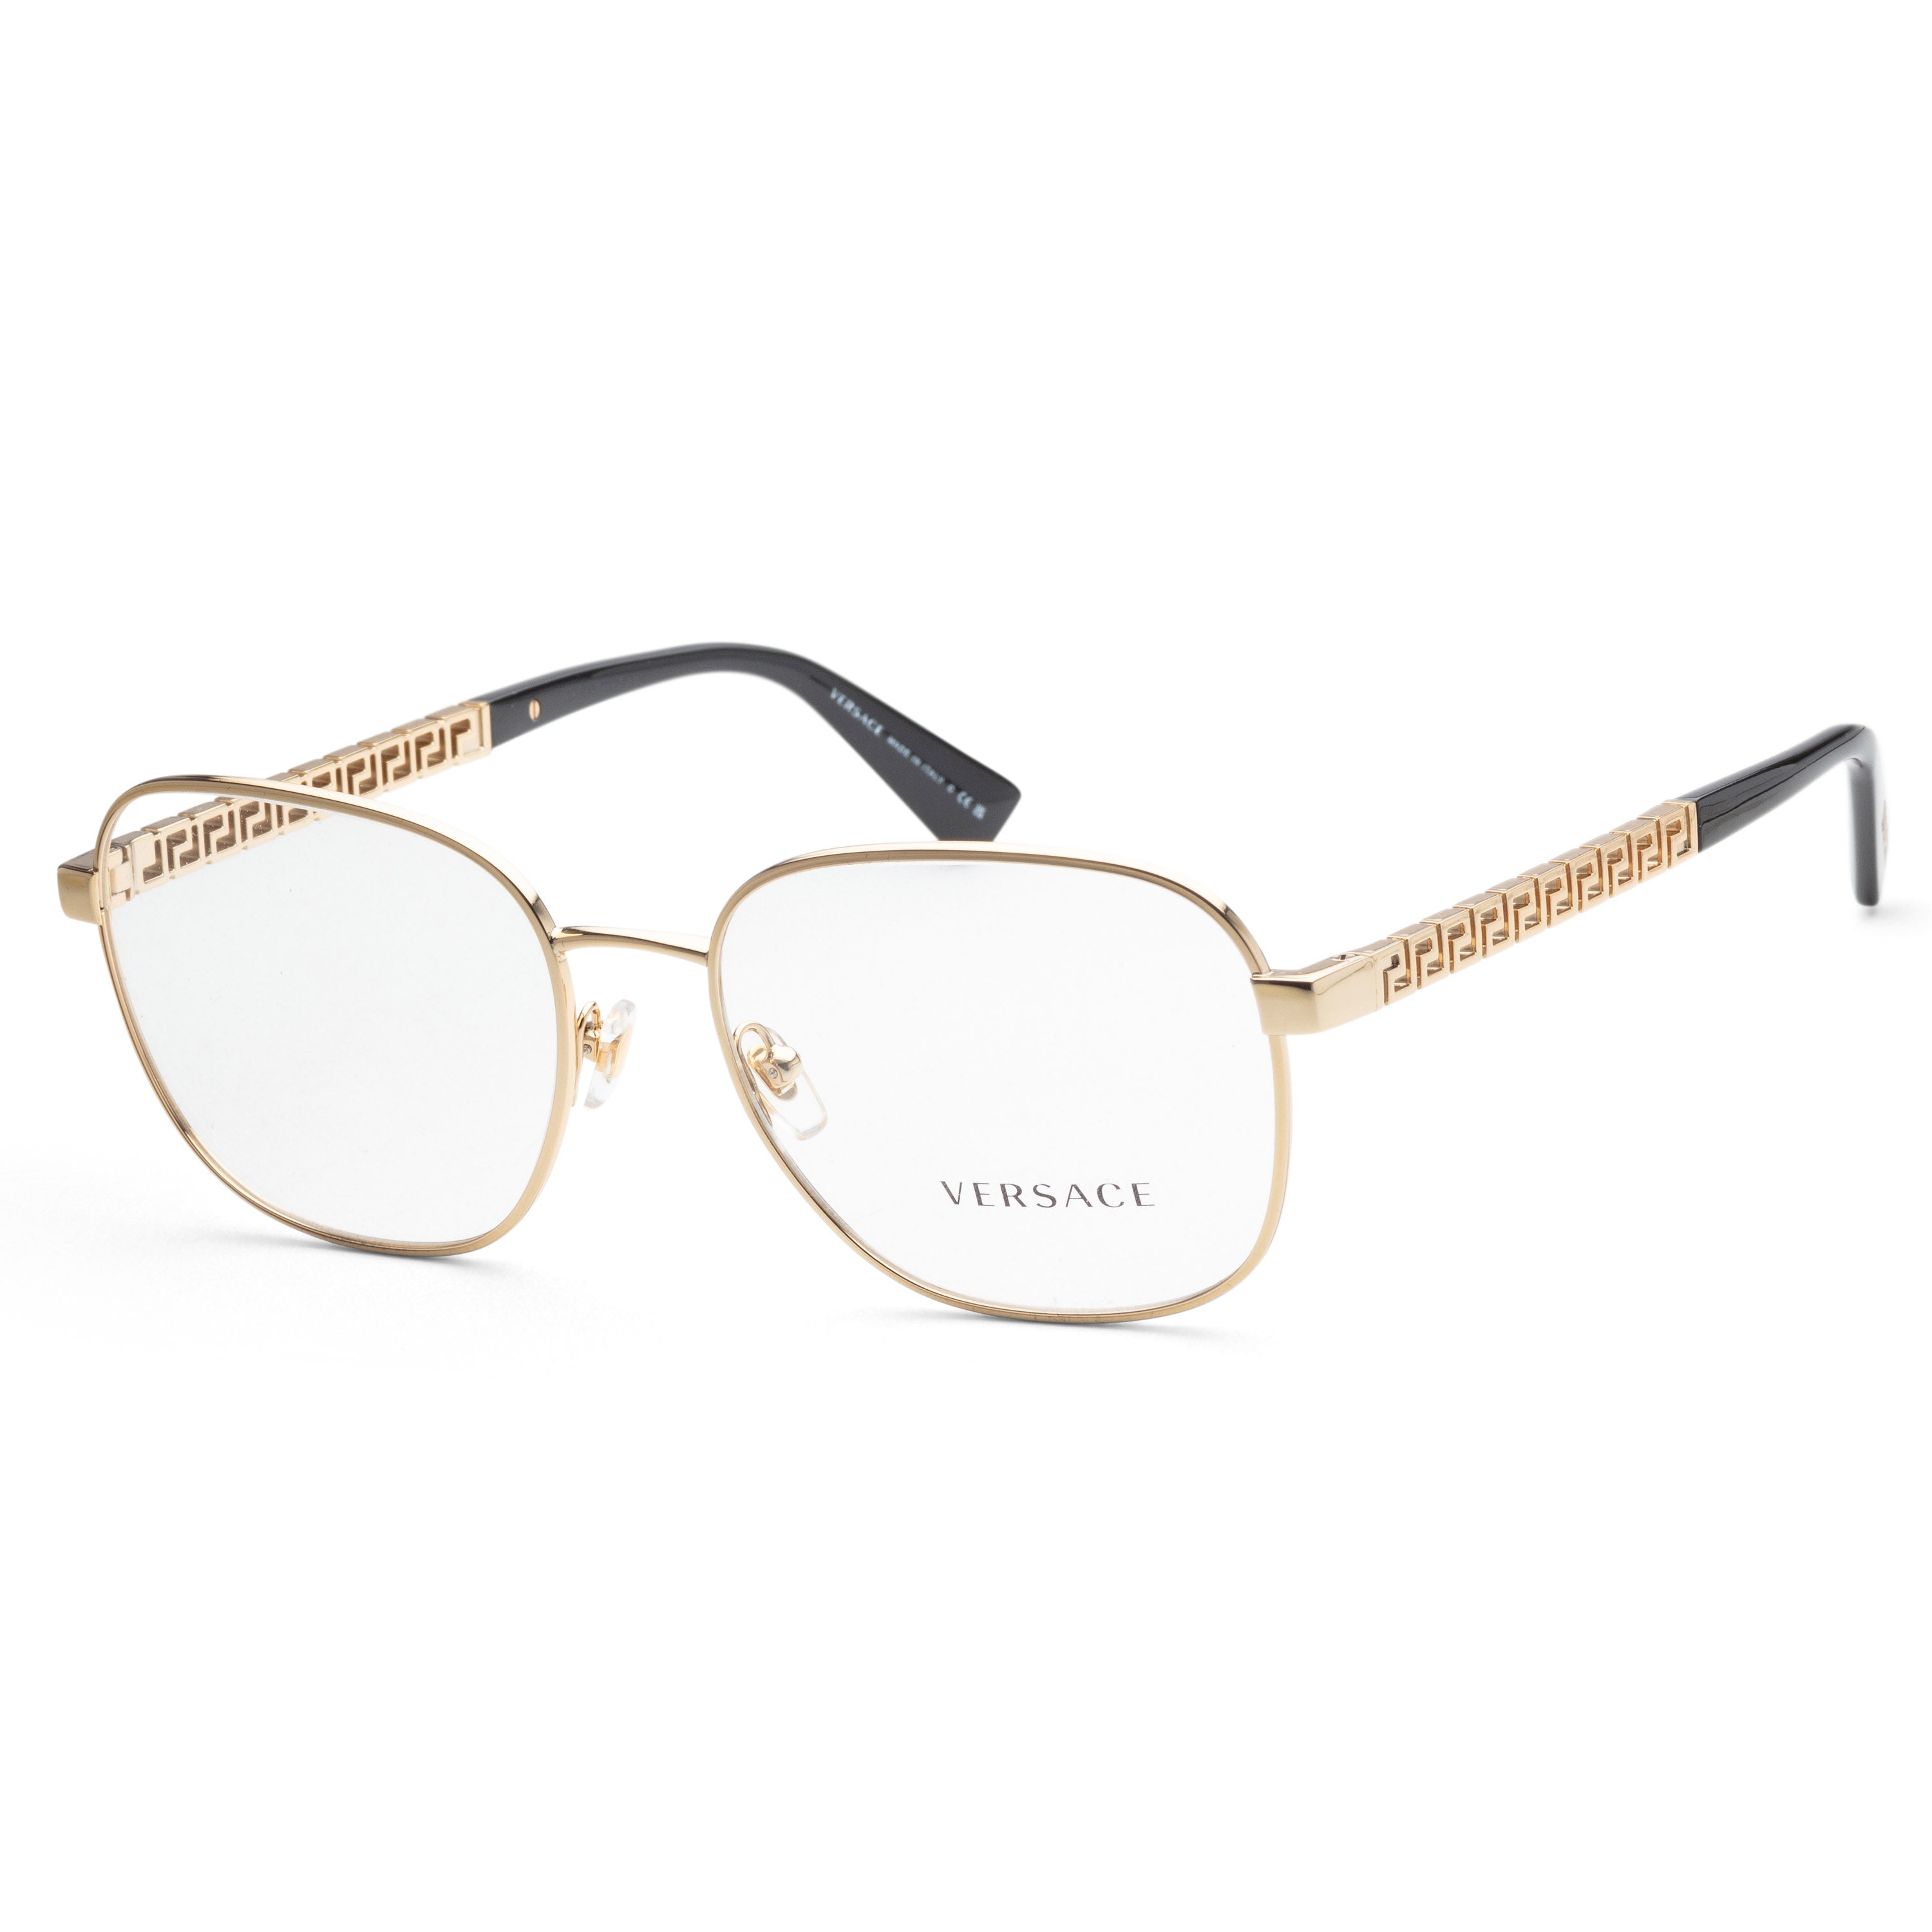 title:Versace Men's VE1290-1002-56 Fashion 56mm Gold Opticals;color:Gold